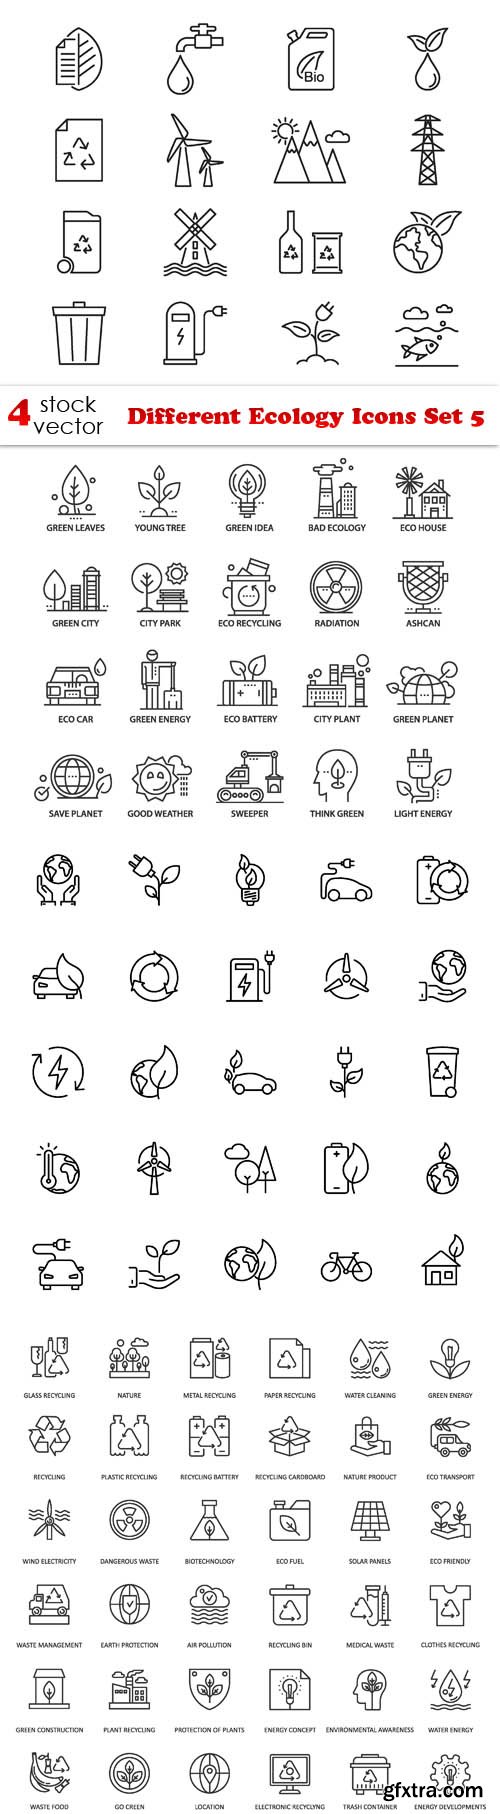 Vectors - Different Ecology Icons Set 5